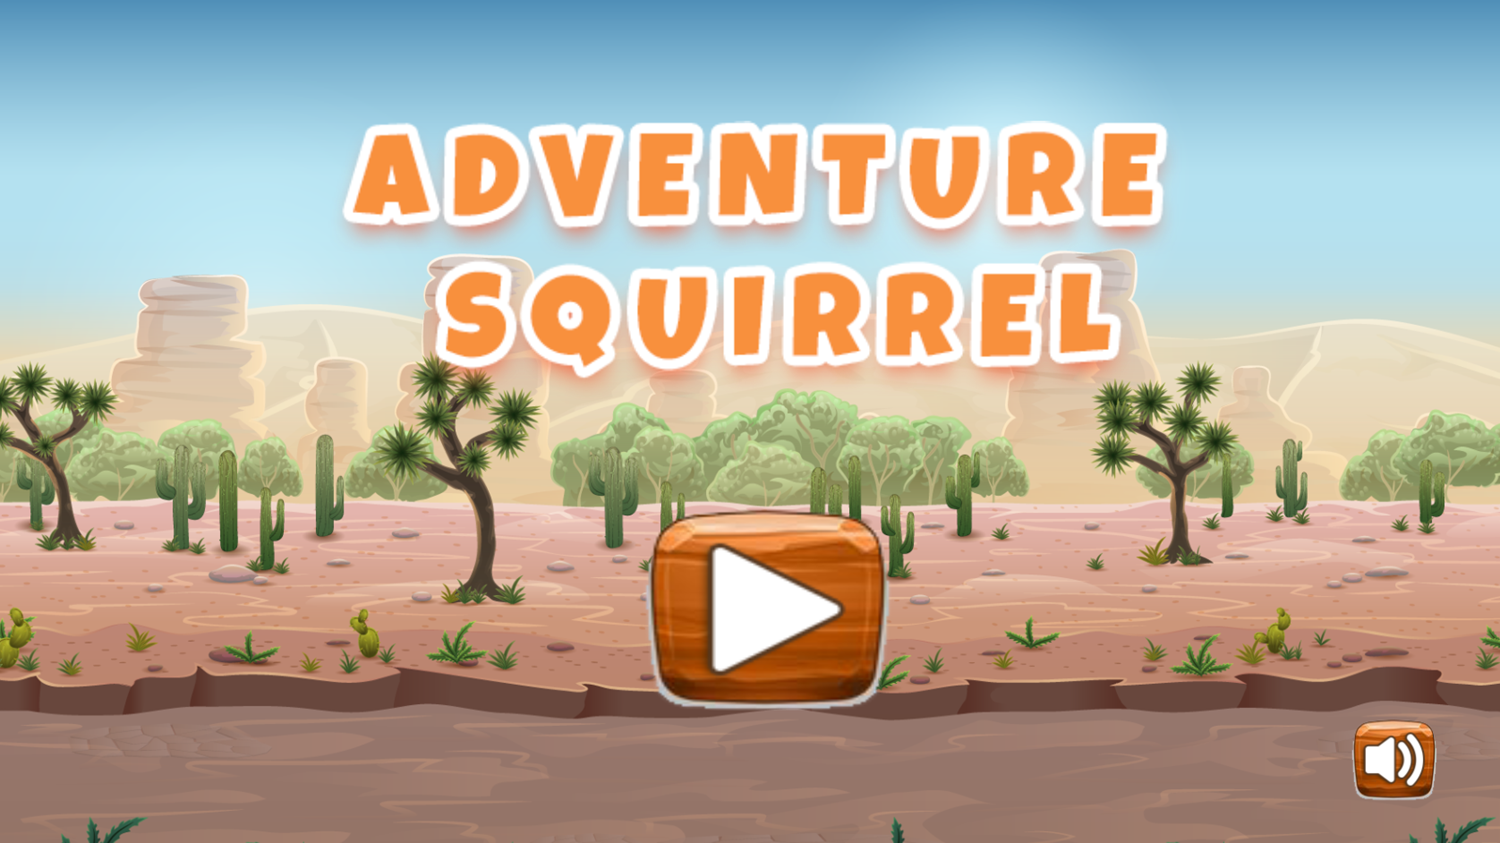 Adventure Squirrel Game Welcome Screen Screenshot.